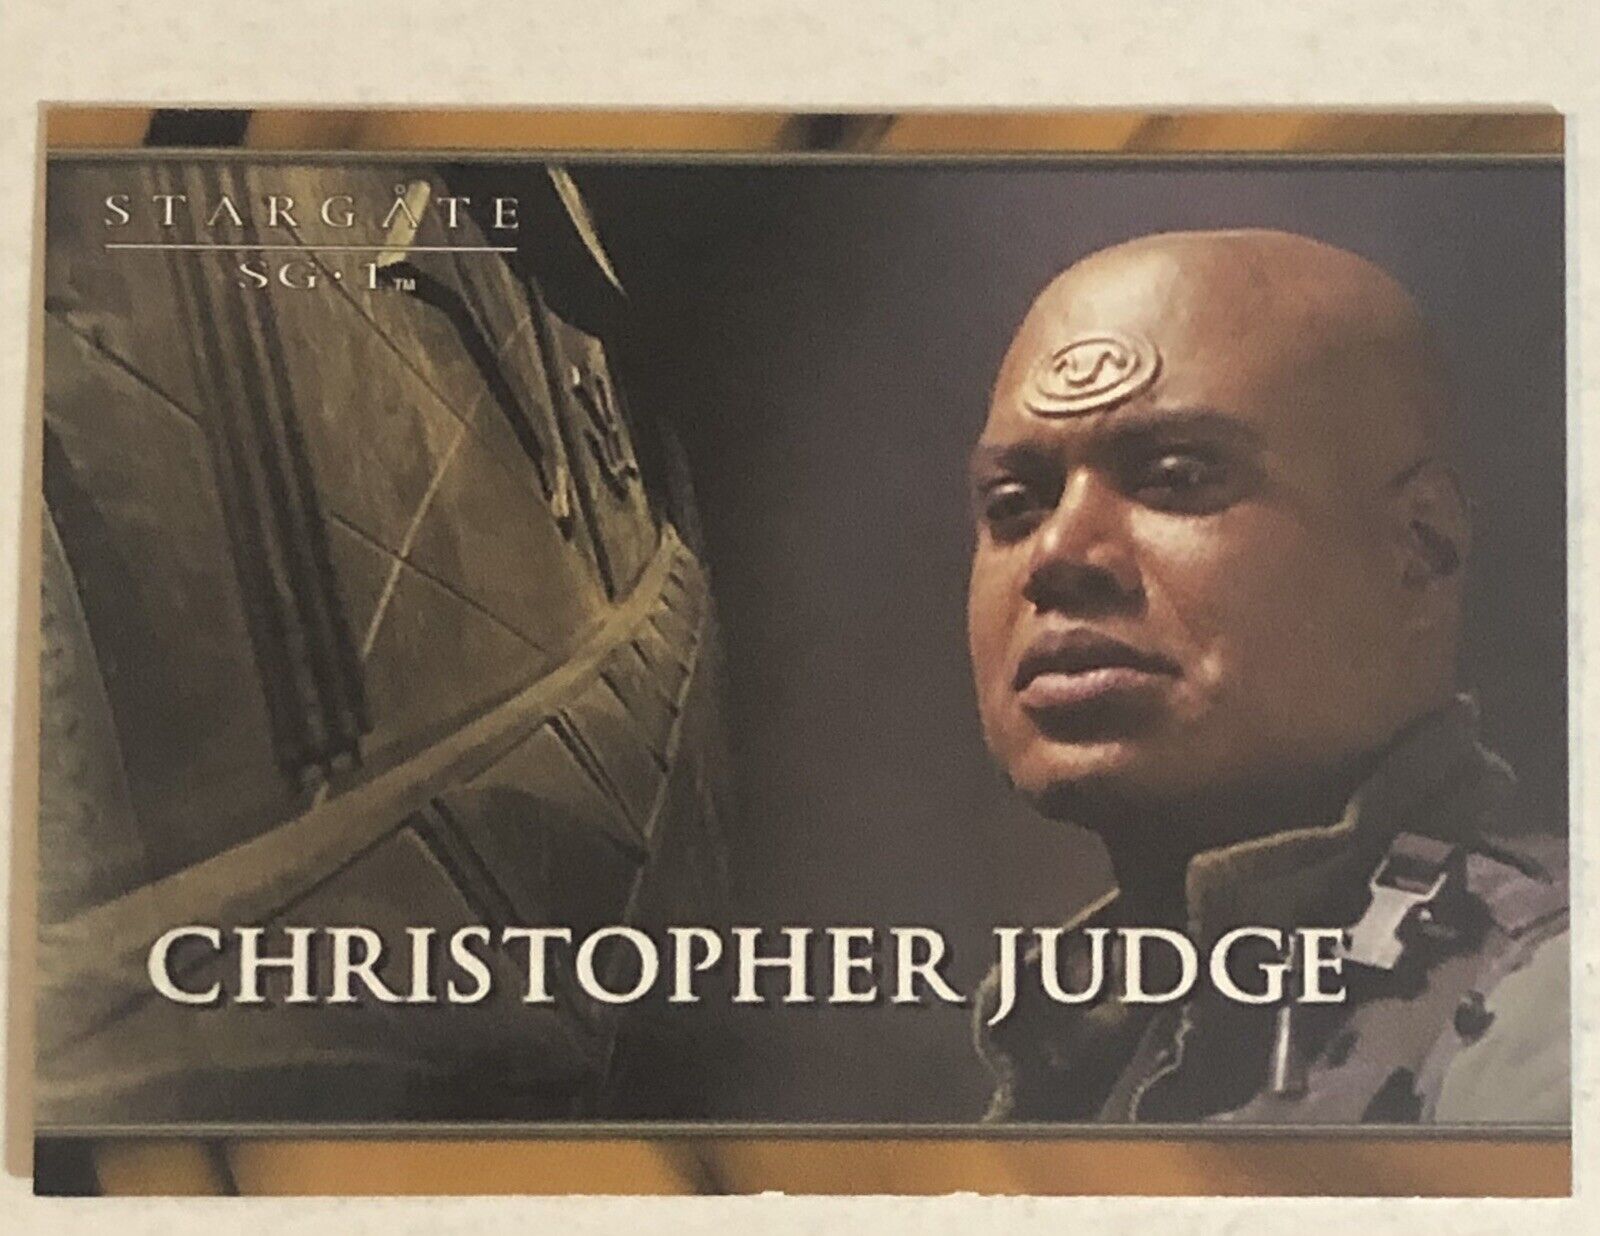 Stargate SG1 Trading Card Richard Dean Anderson #72 Christopher Judge